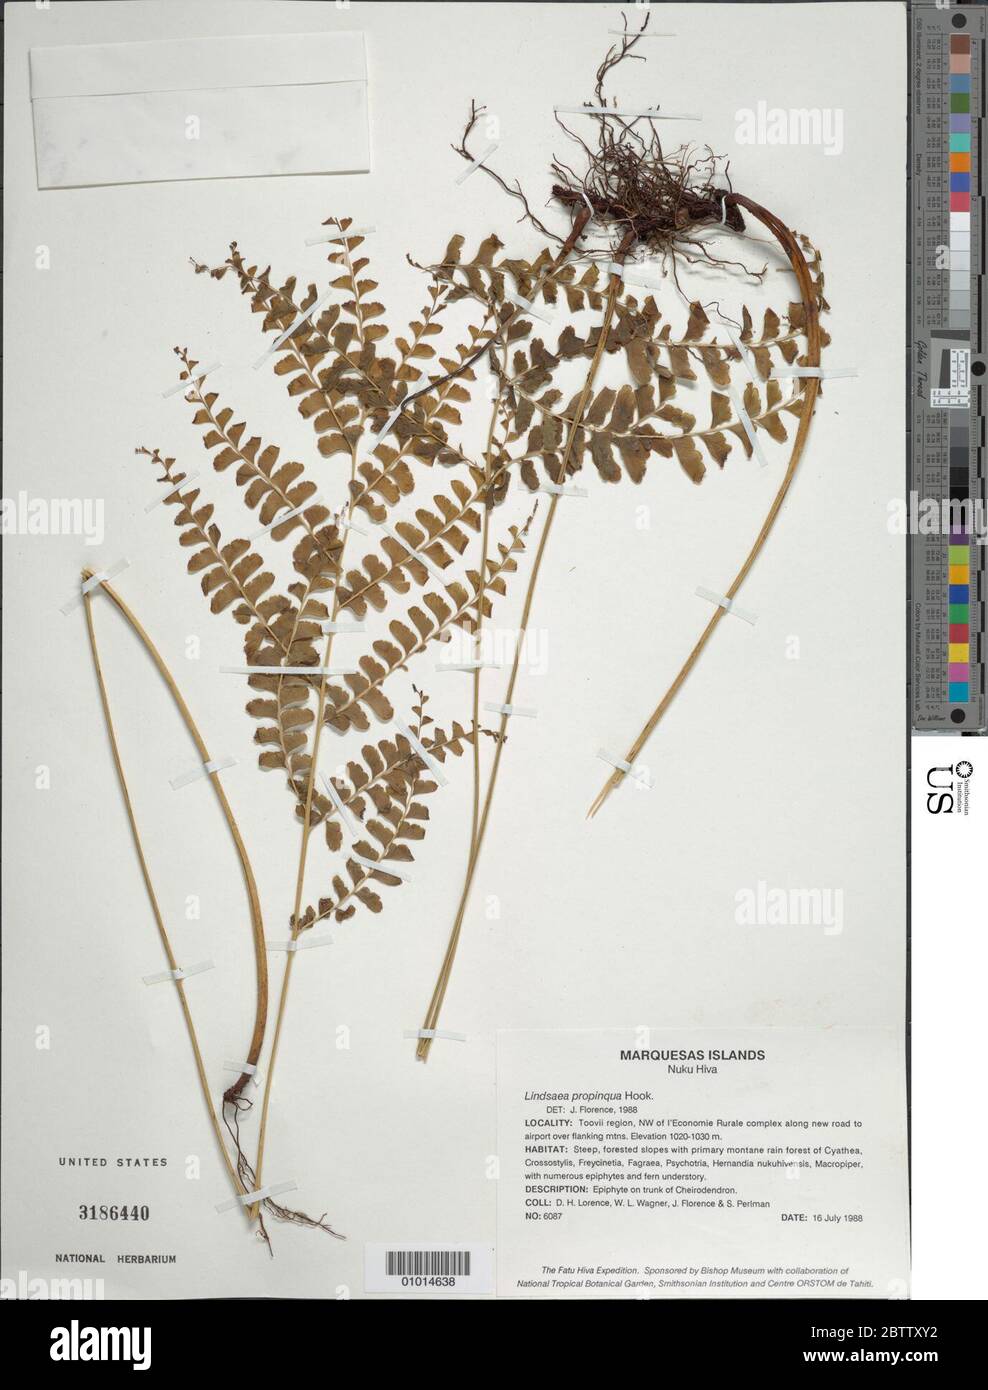 Lindsaea propinqua Hook. Stock Photo